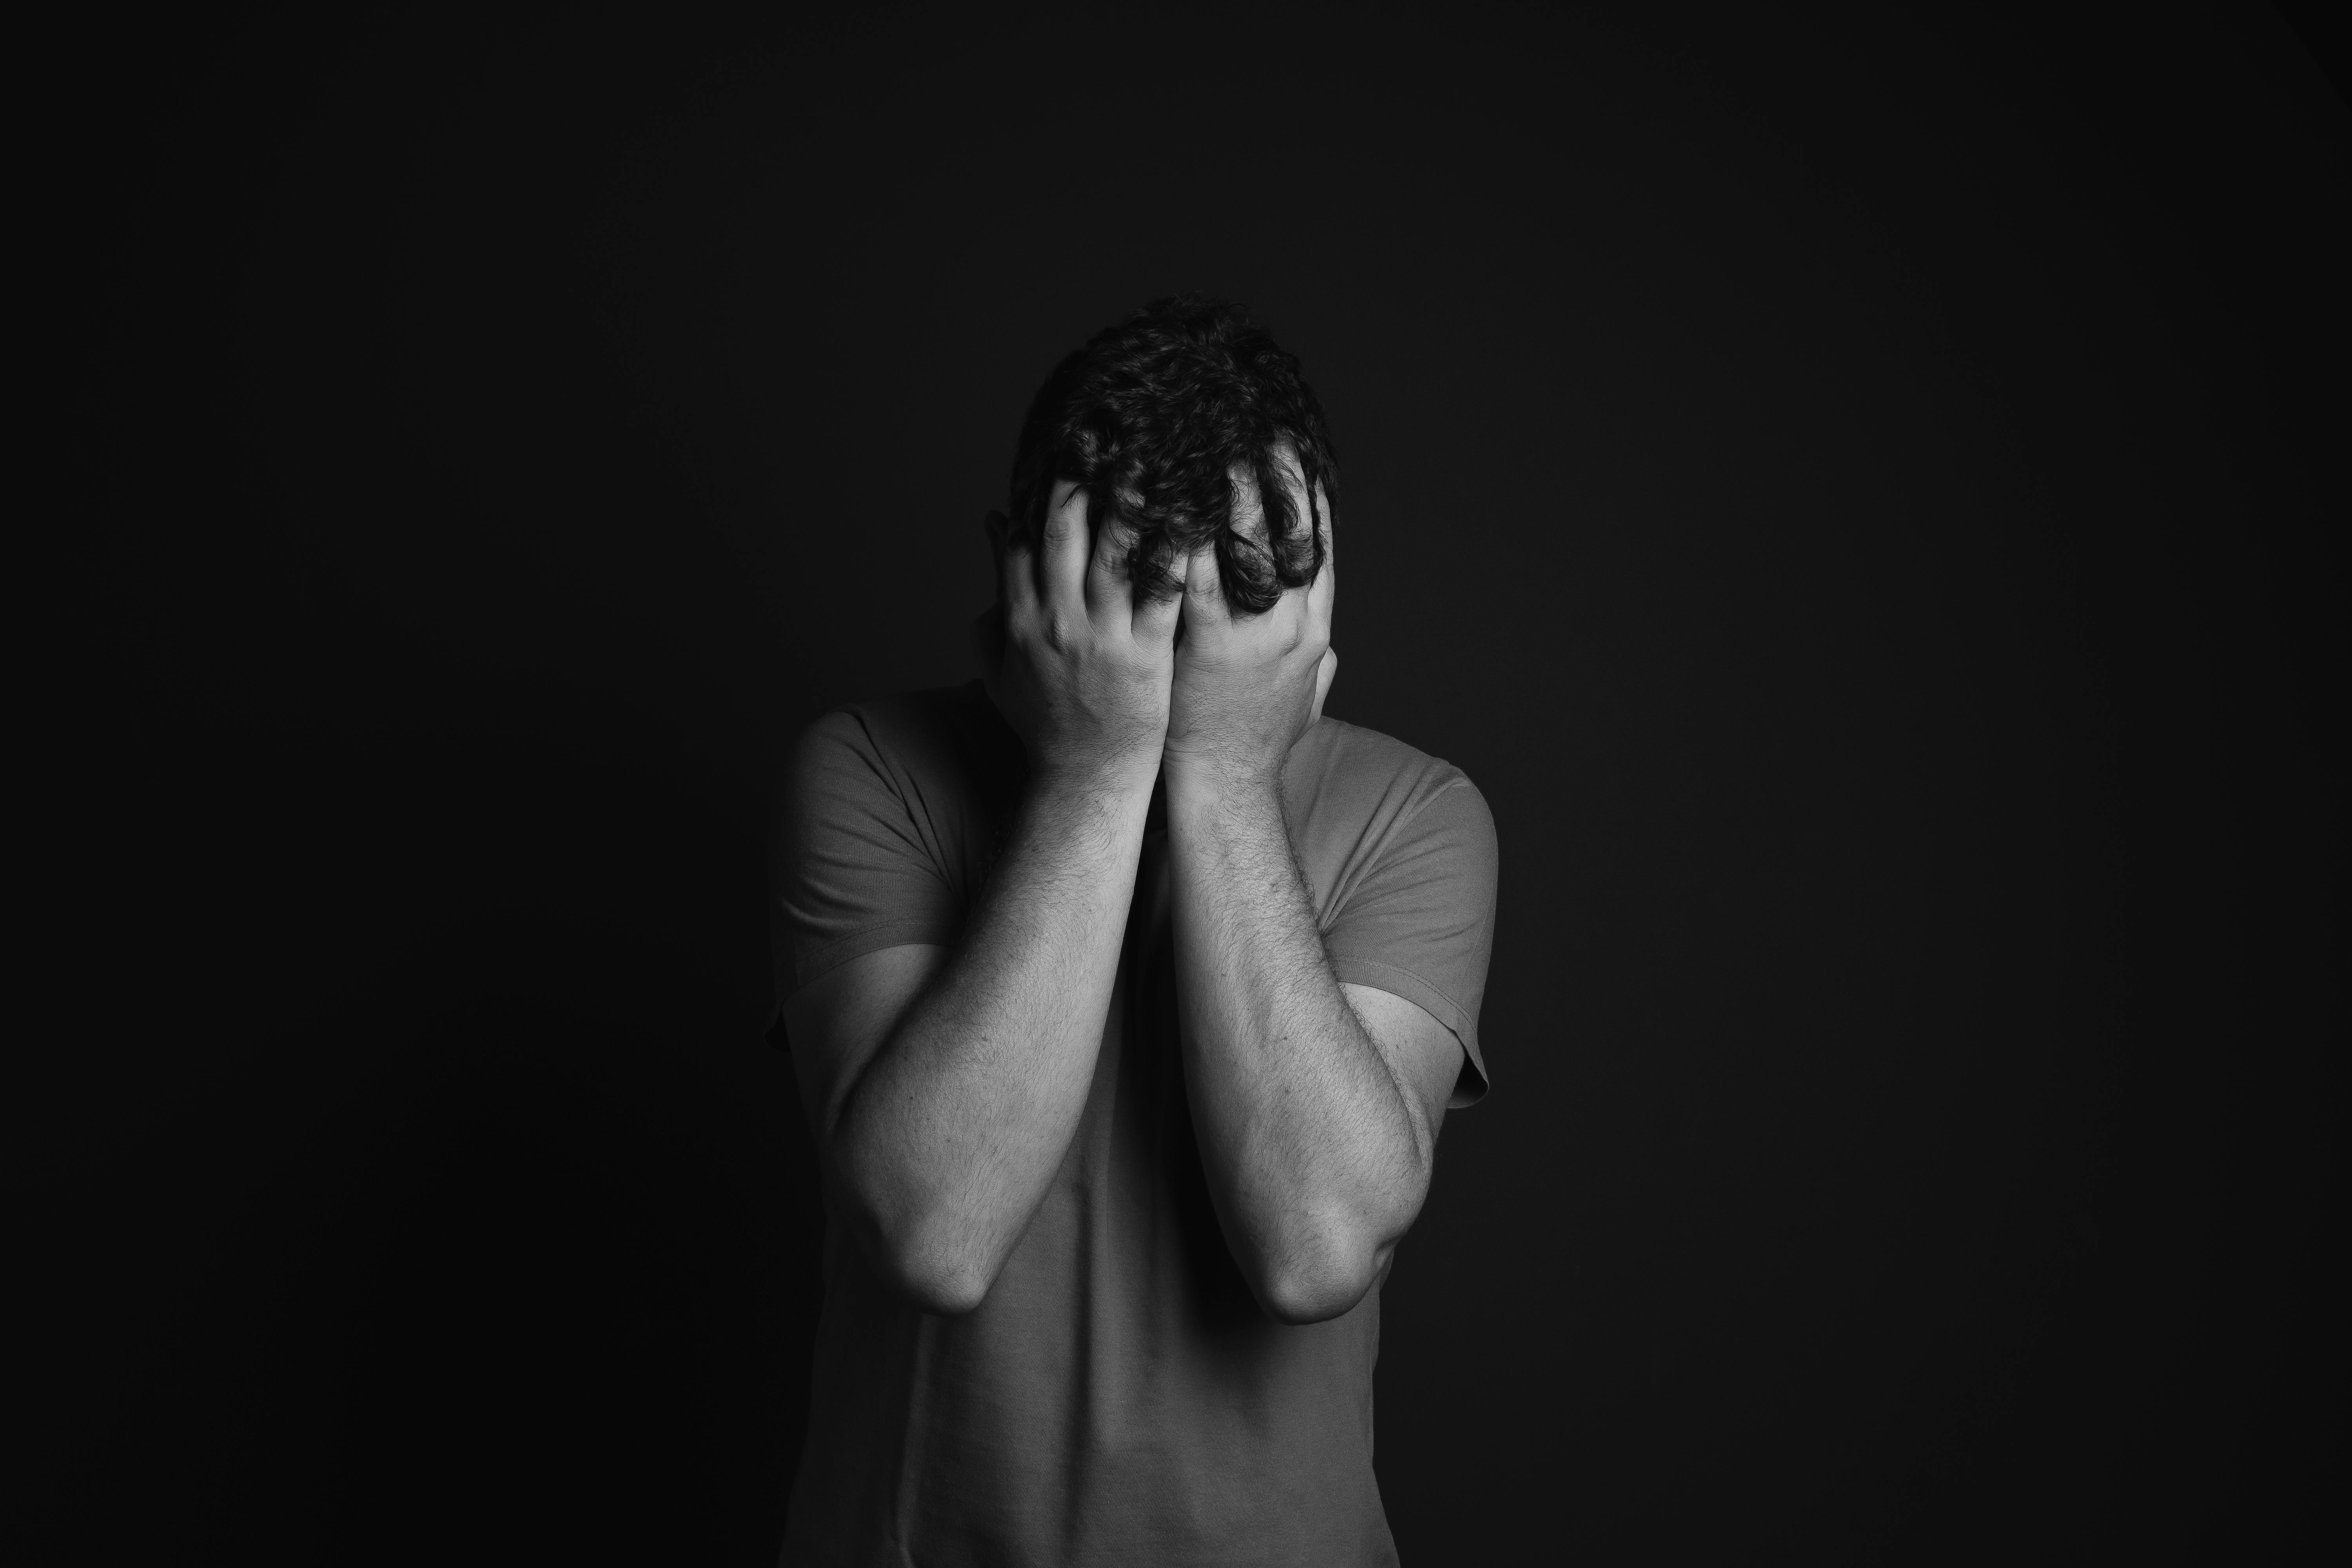 A depressed man | Source: Pexels